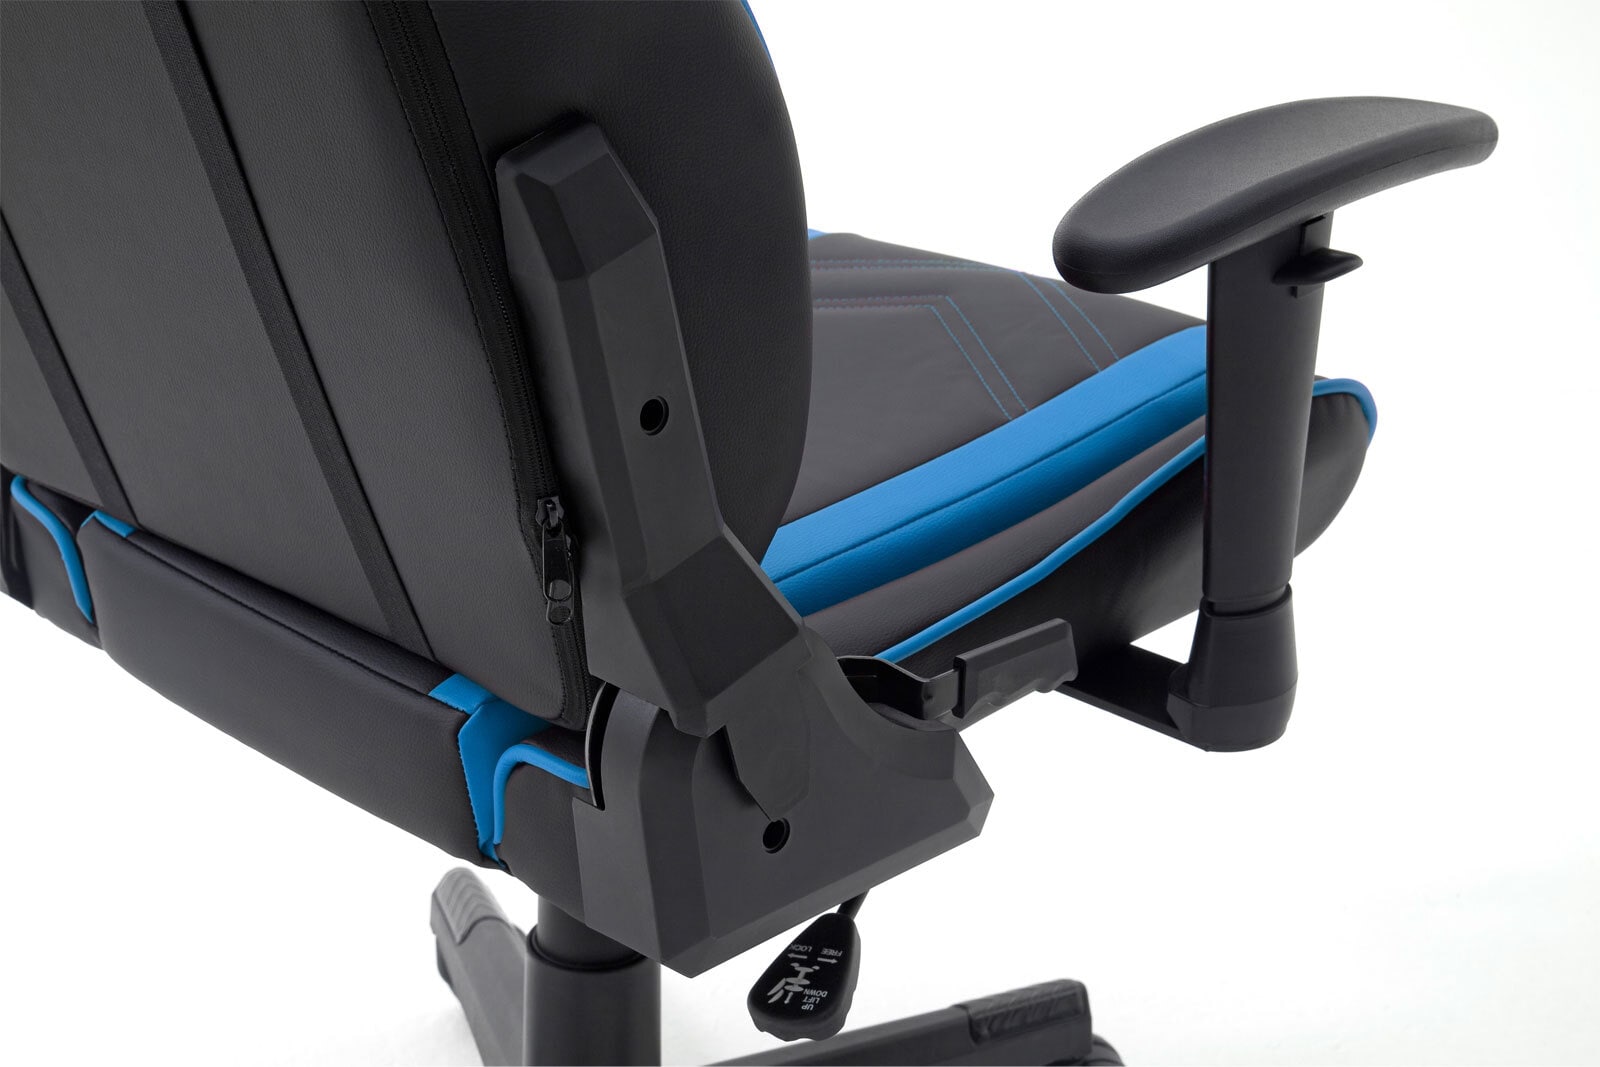 DX RACER Gaming Stuhl blau/ schwarz 